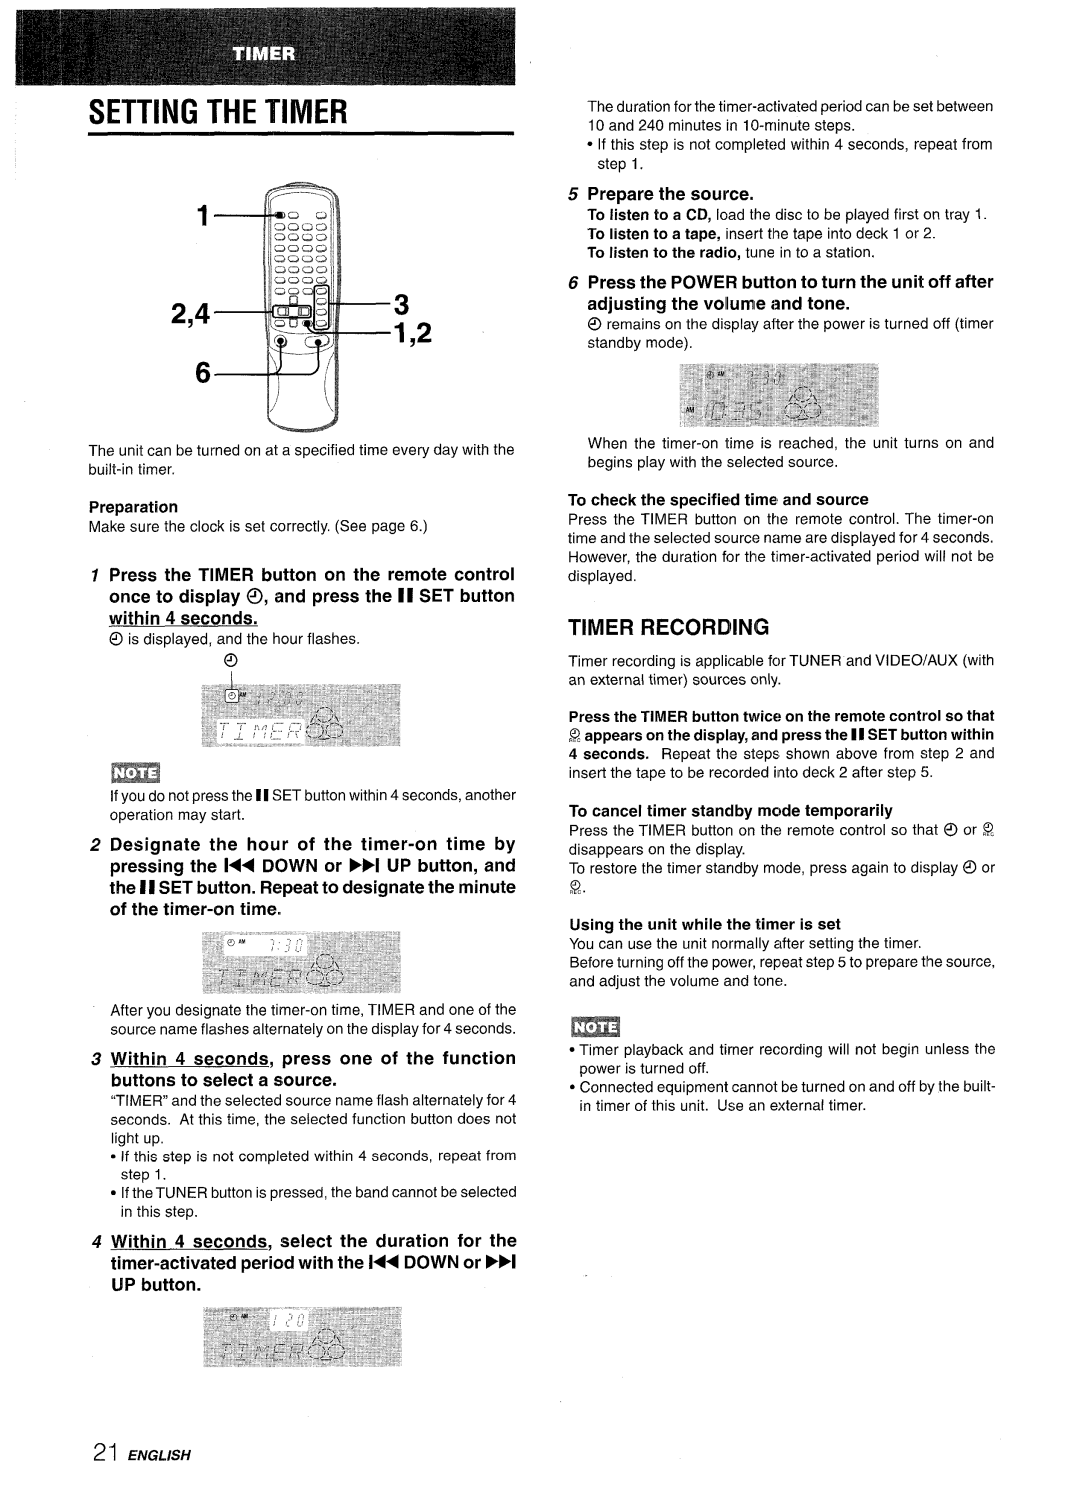 Aiwa NSX-AV800 manual Setting The Timer, 2,43 1,2, Timer Recording, Preparation, Prepare the source 